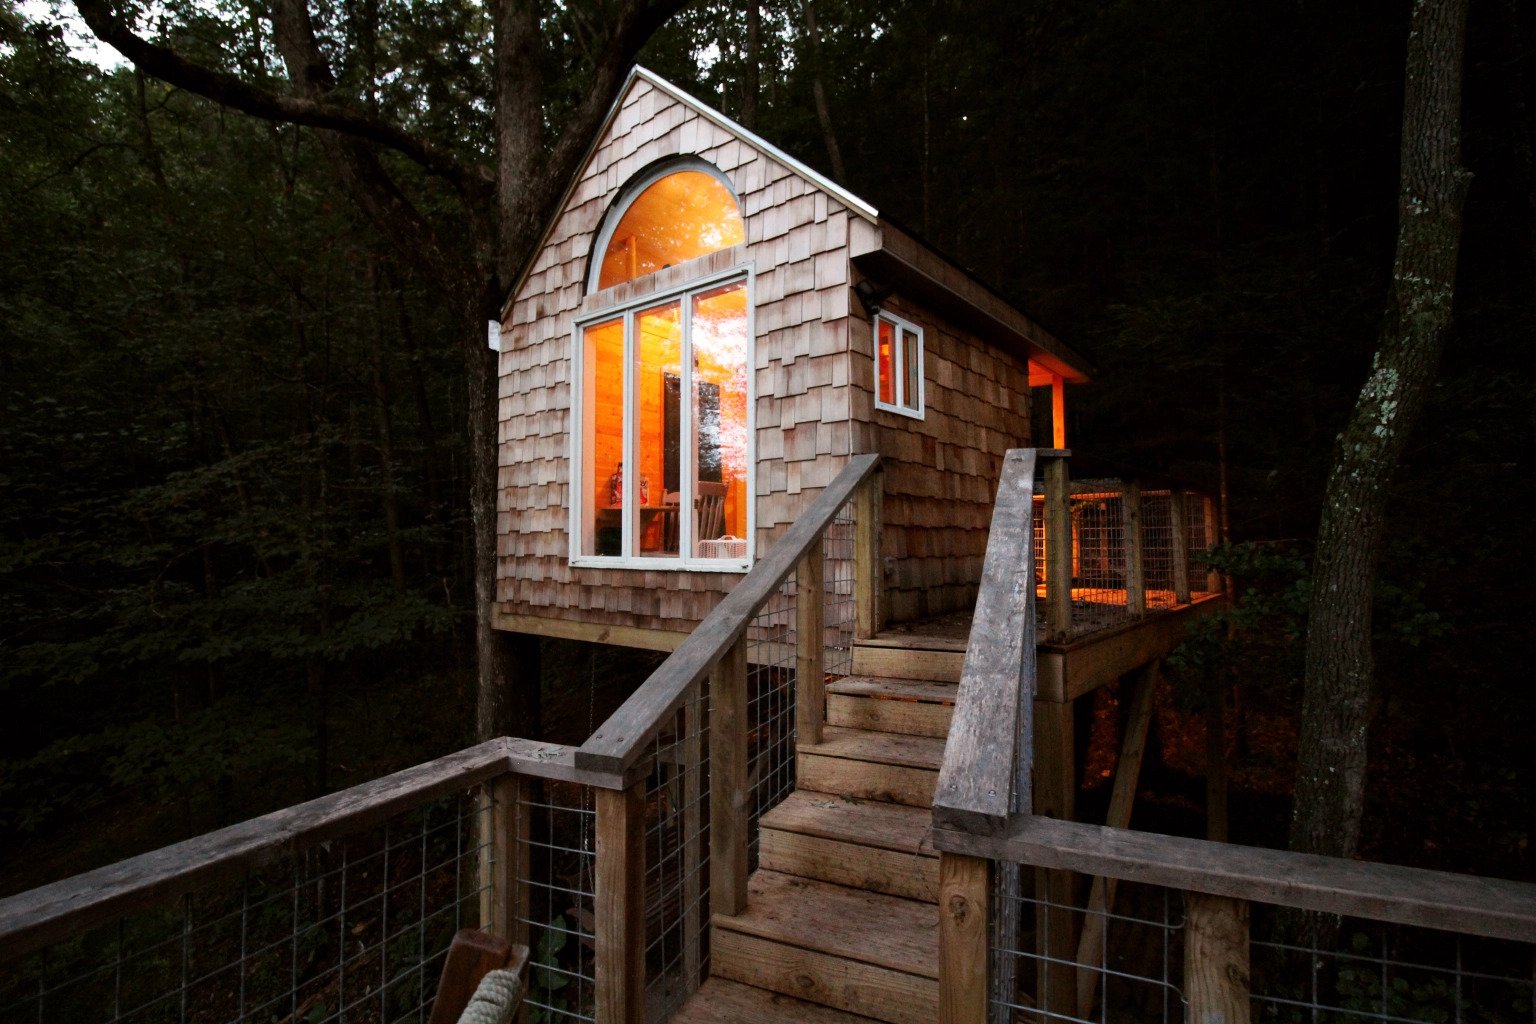 Best Airbnb in Kentucky